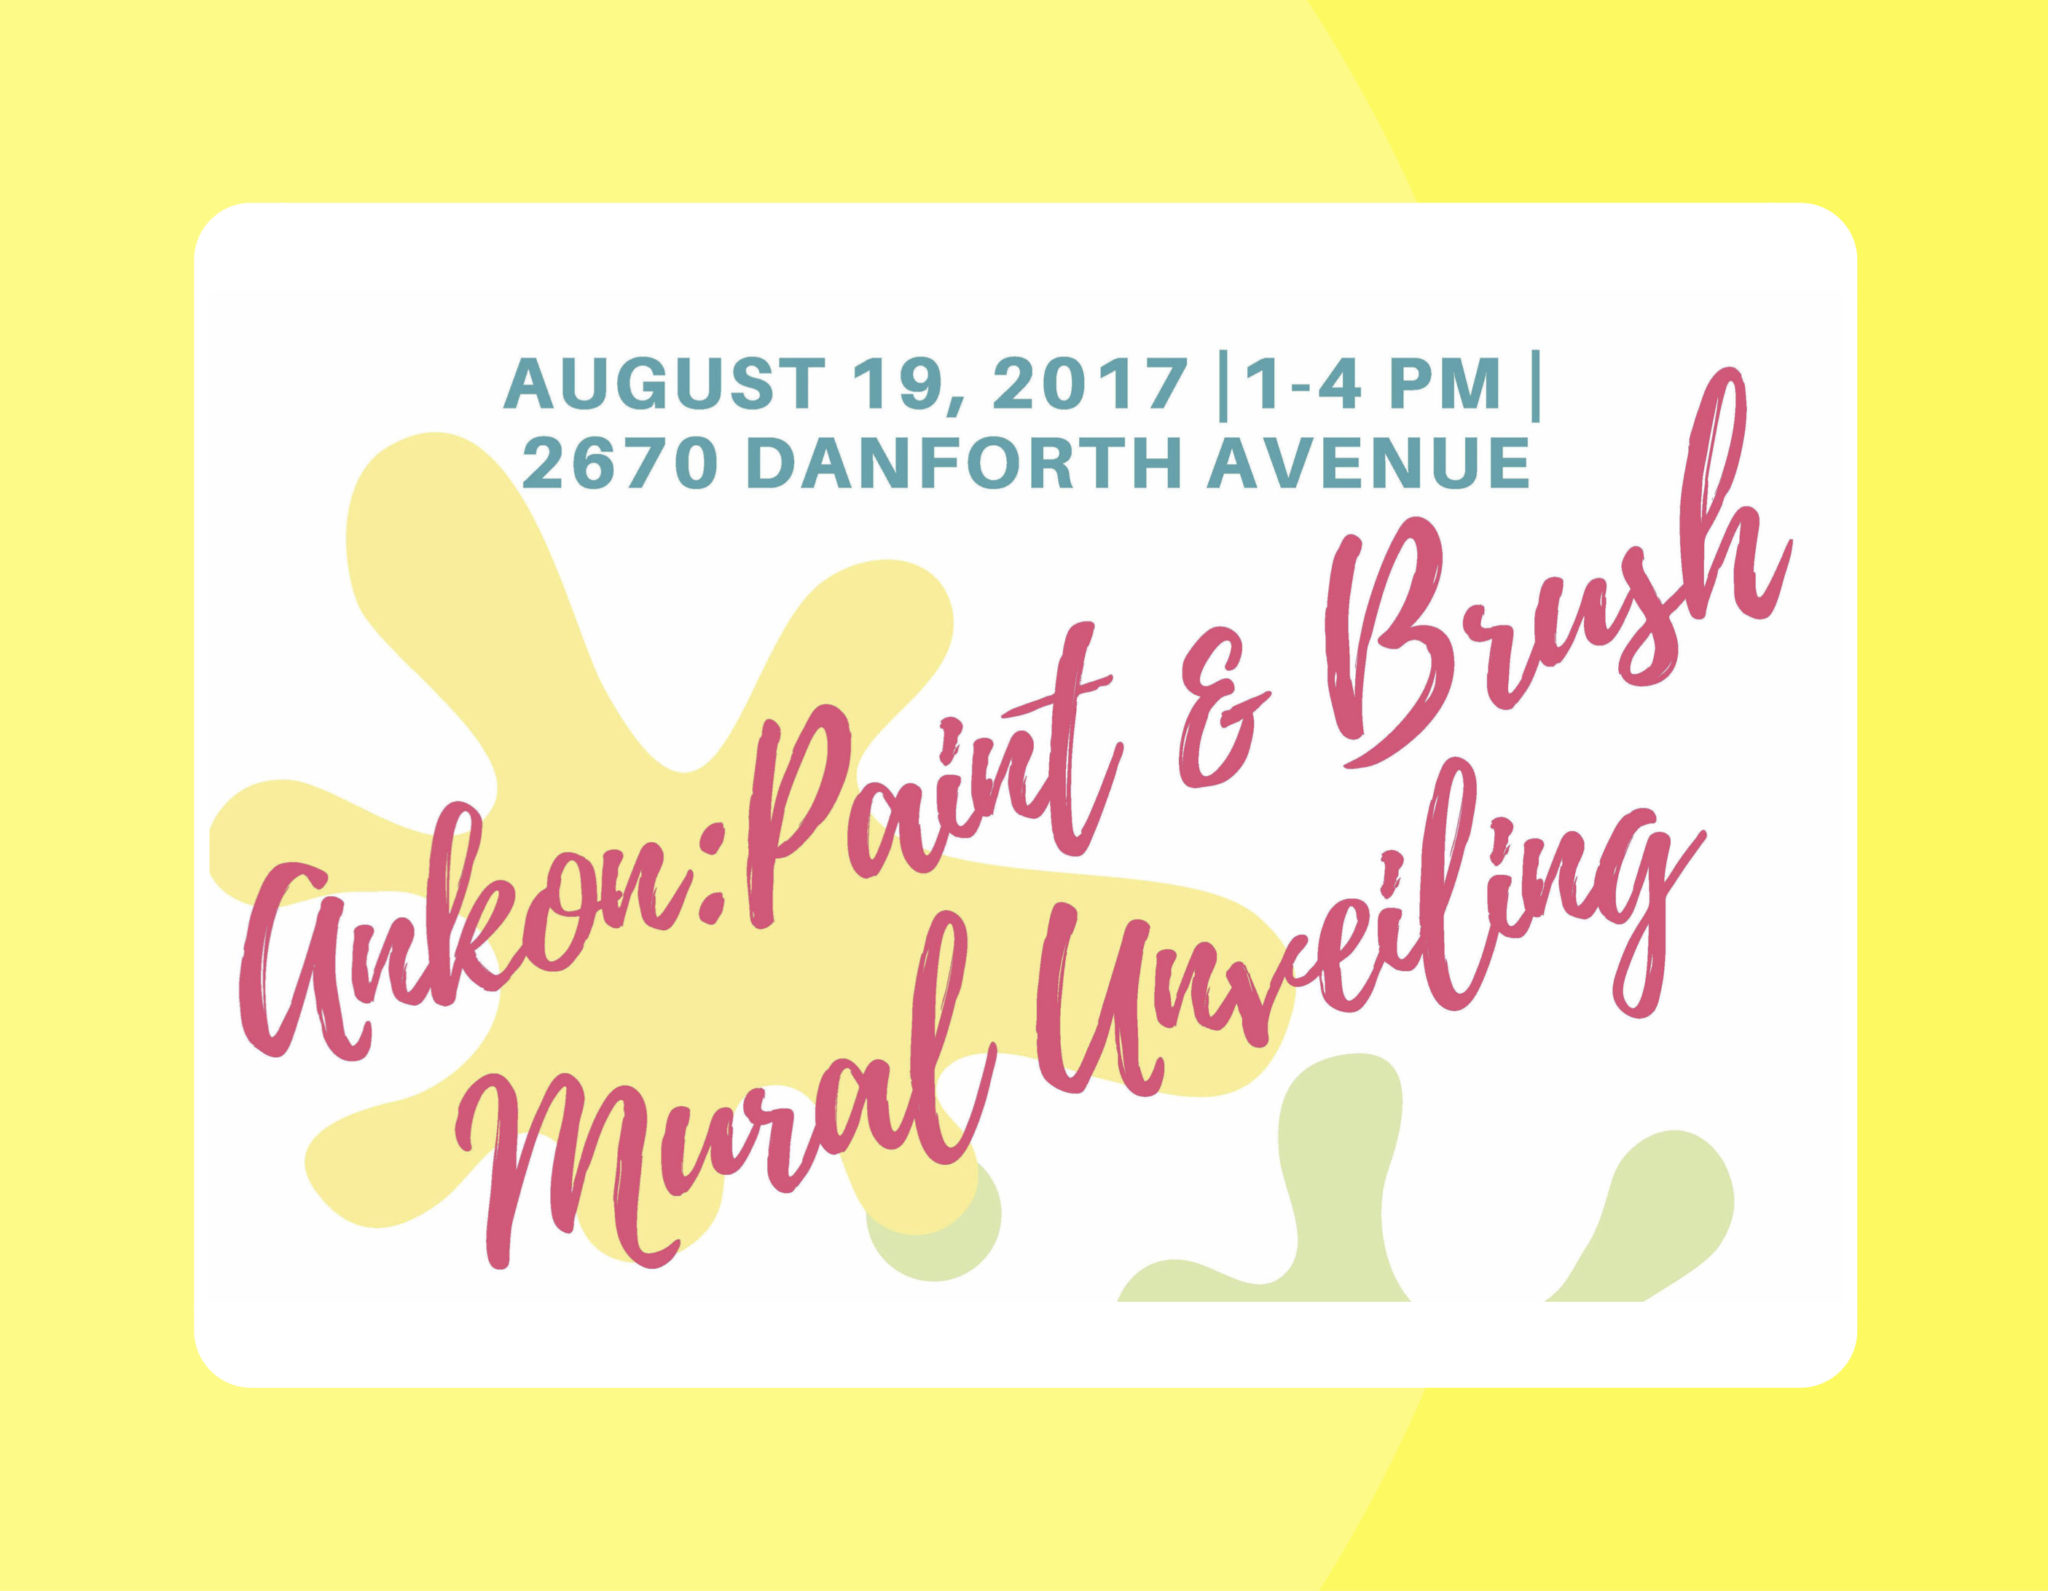 Ankon: Paint & Brush – Mural Unveiling